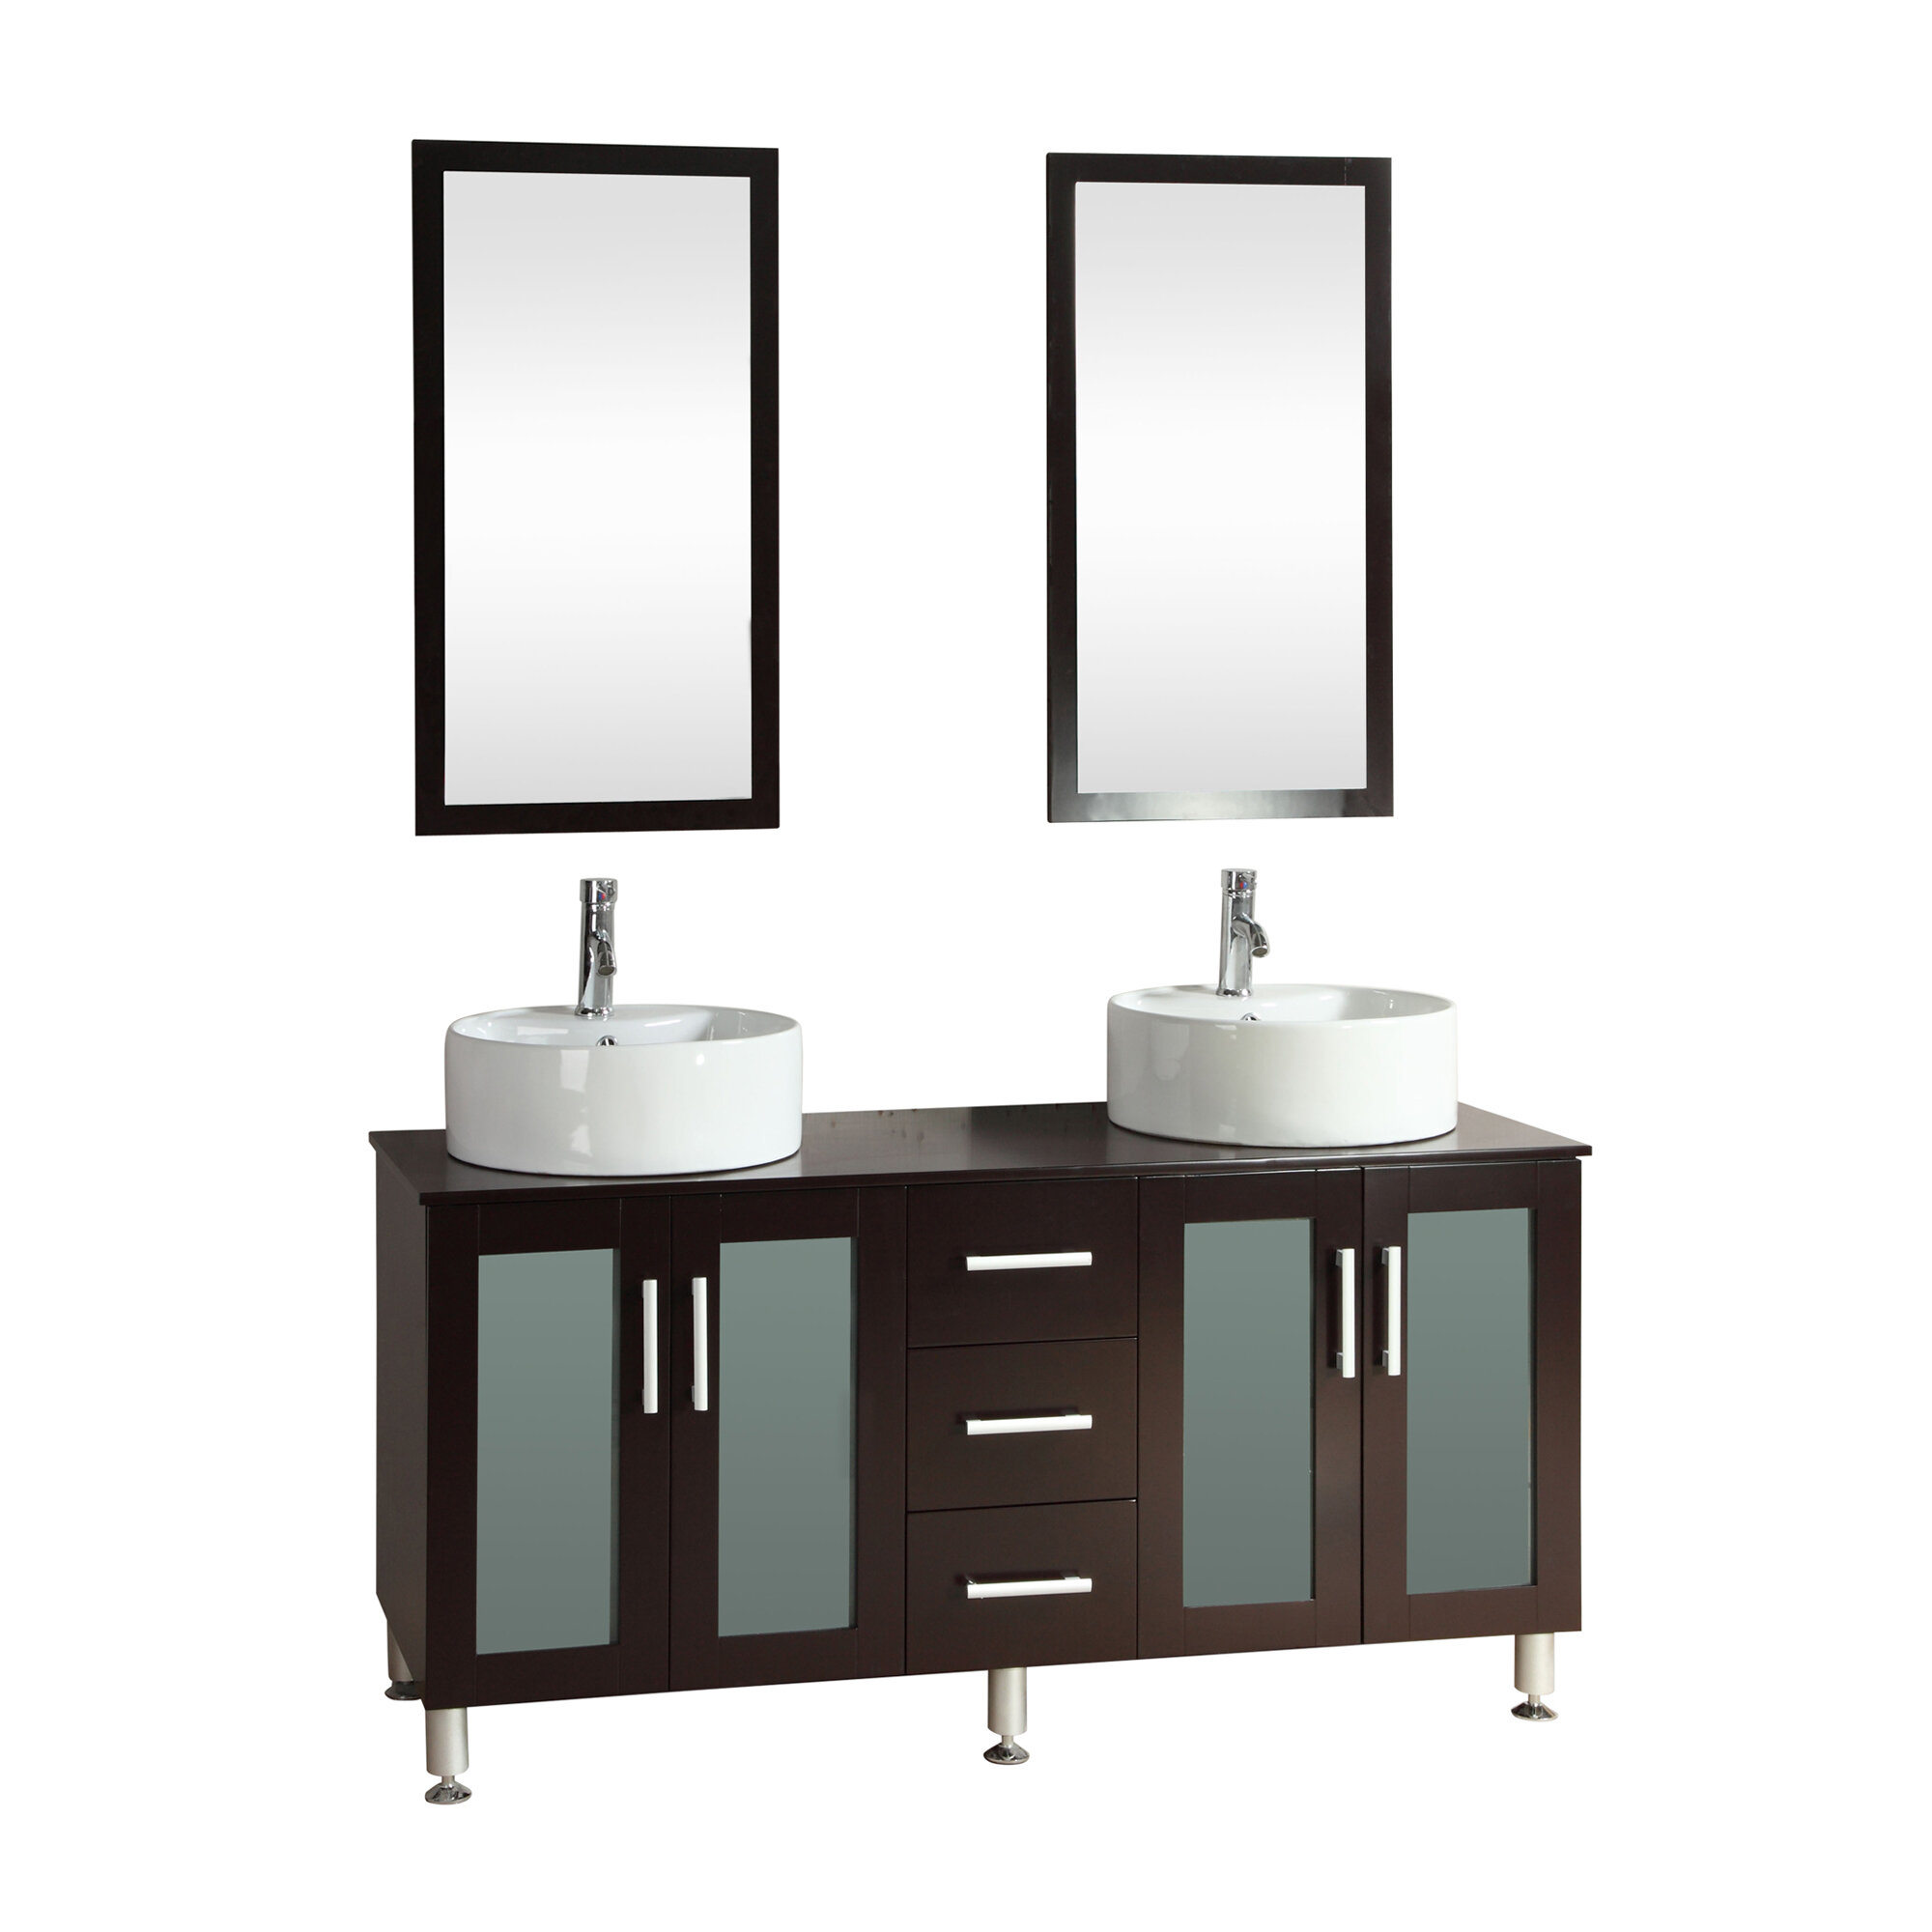 Fresh kokols vanity set Kokols 60 Double Bathroom Vanity Set With Mirror Wayfair